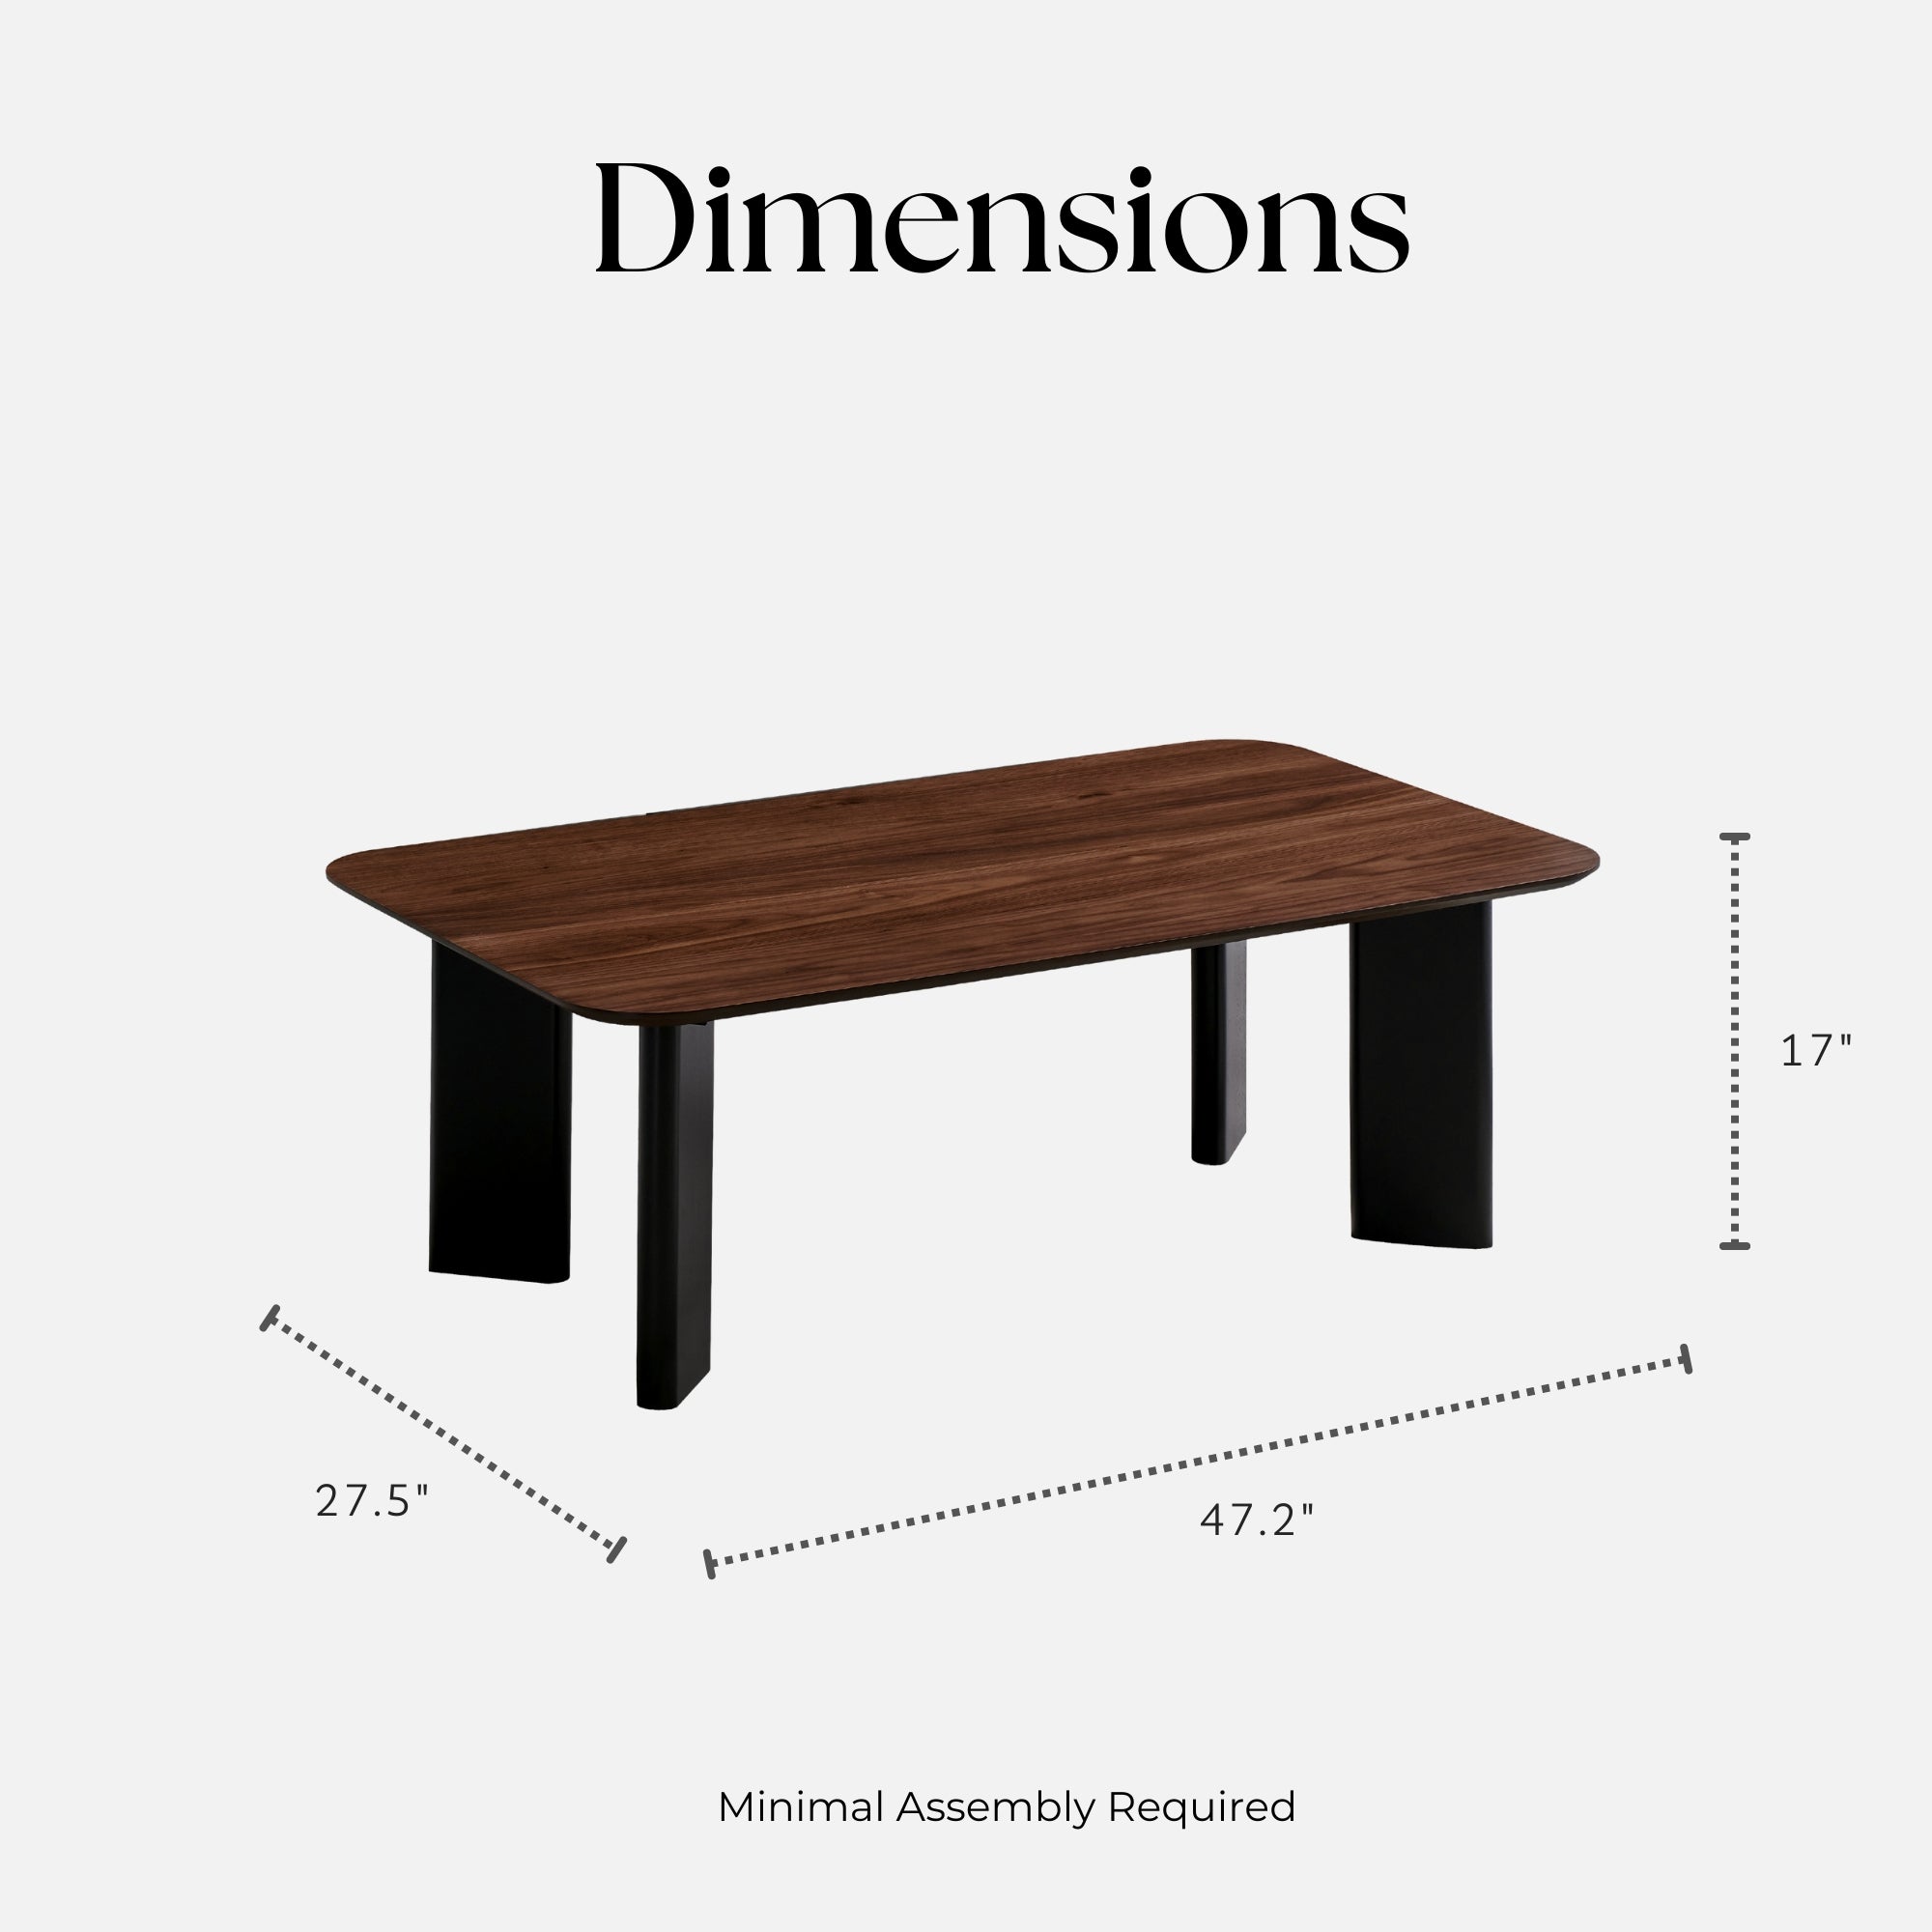 Joss Rectangular Shape Modern Wood Coffee Table, Walnut by NESTMOD